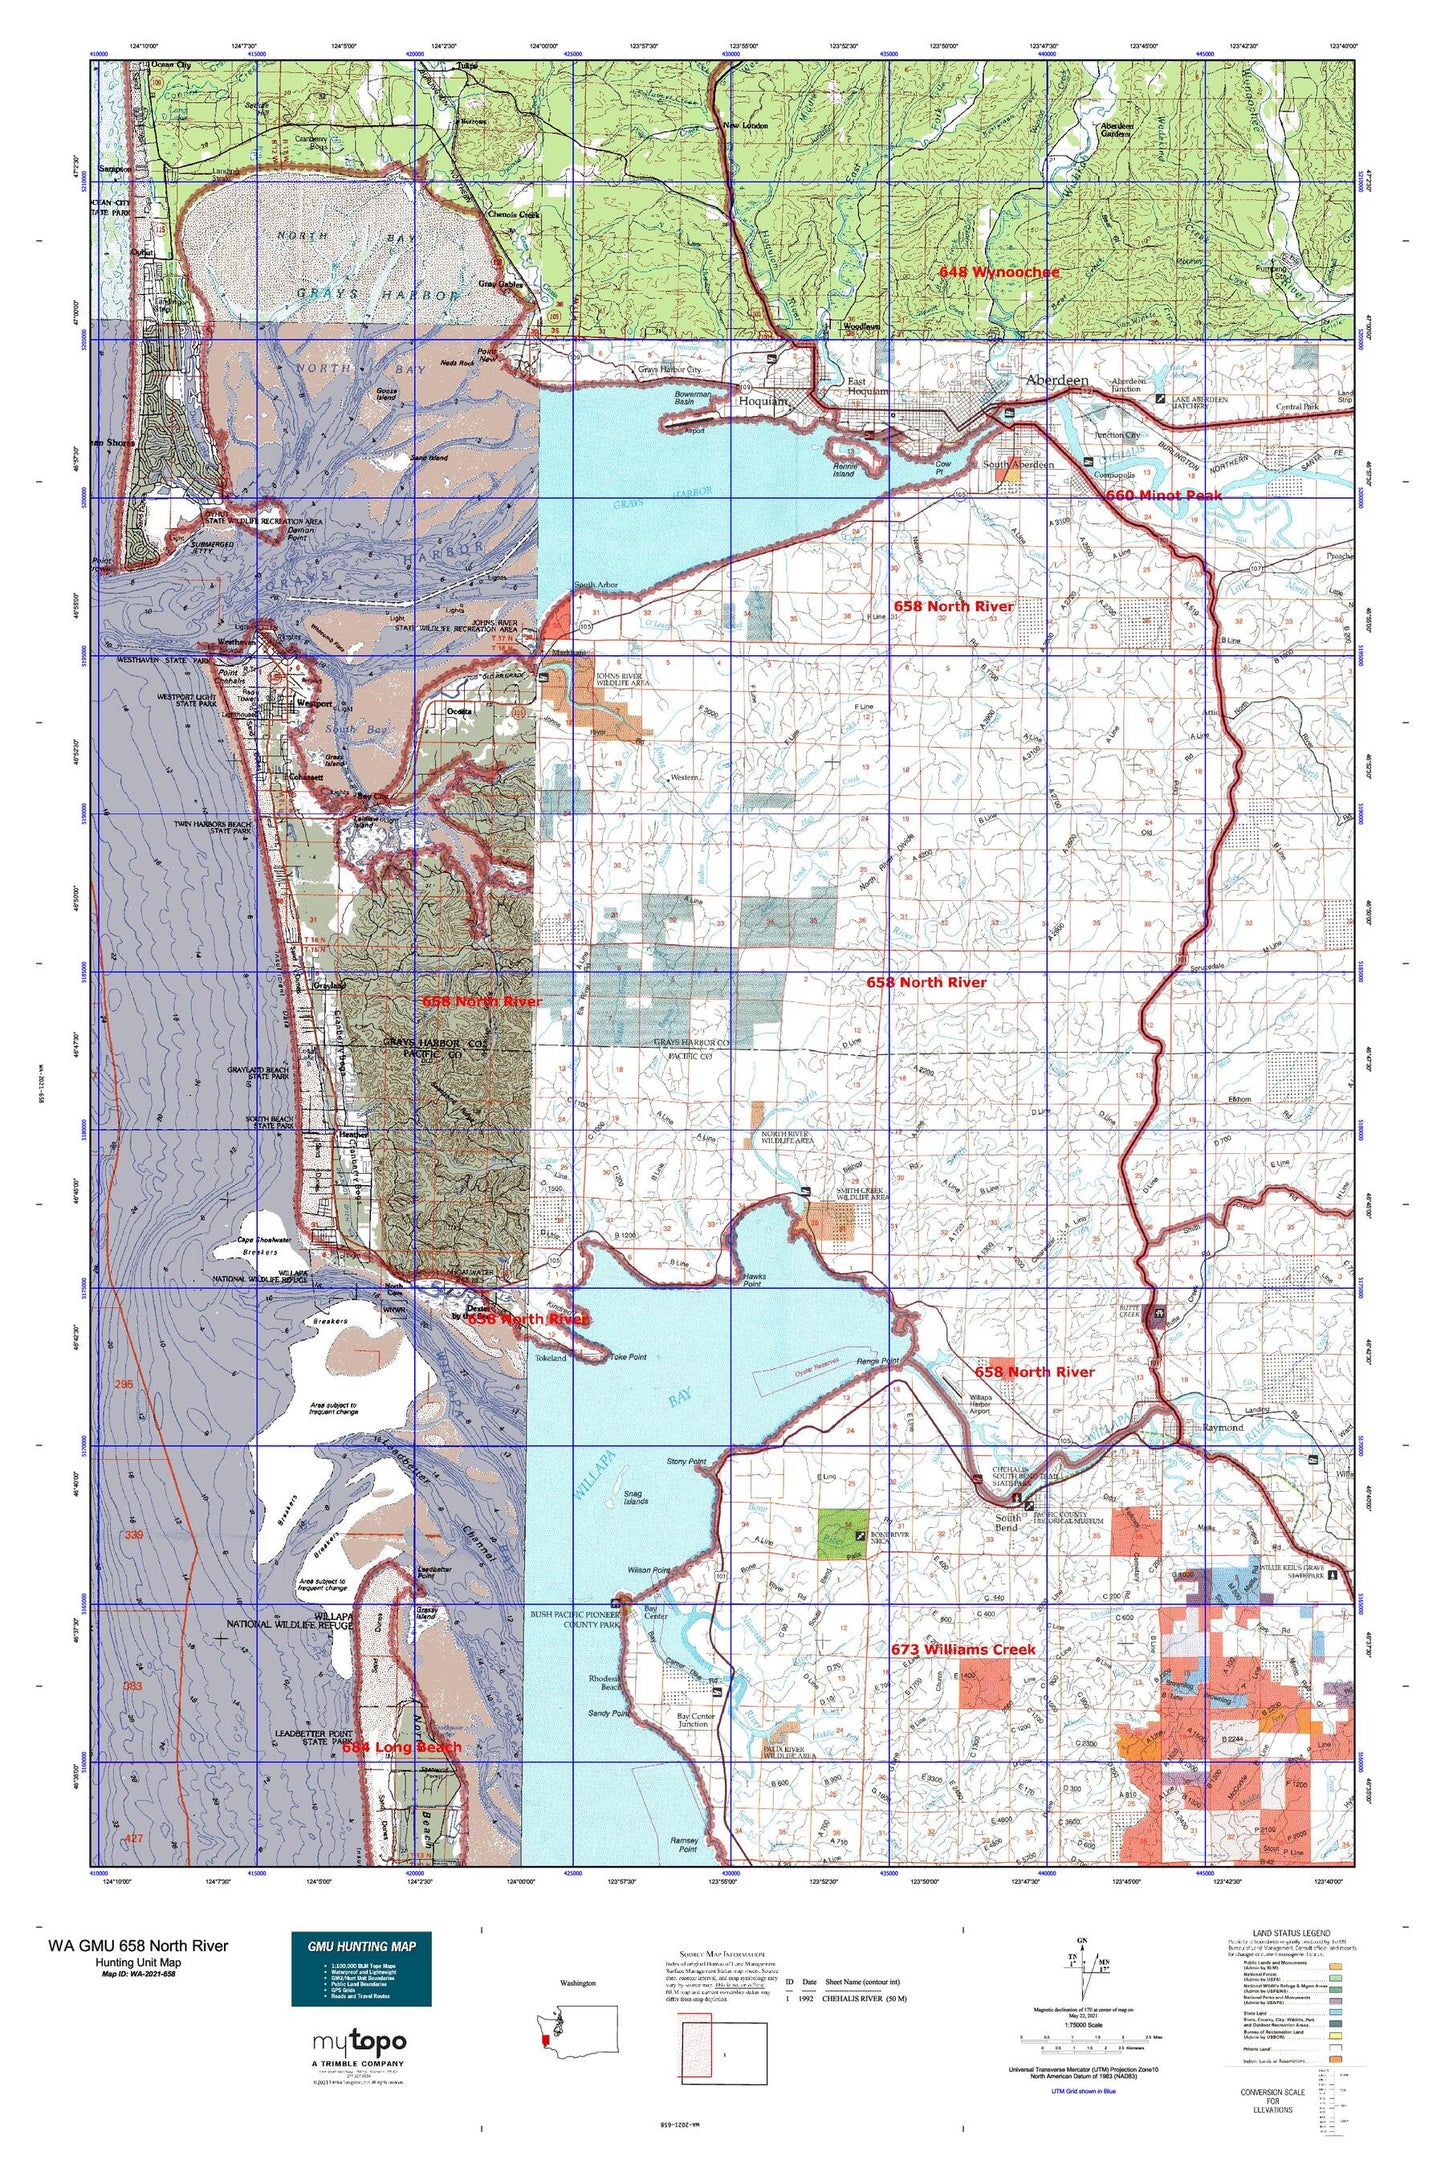 Washington GMU 658 North River Map Image